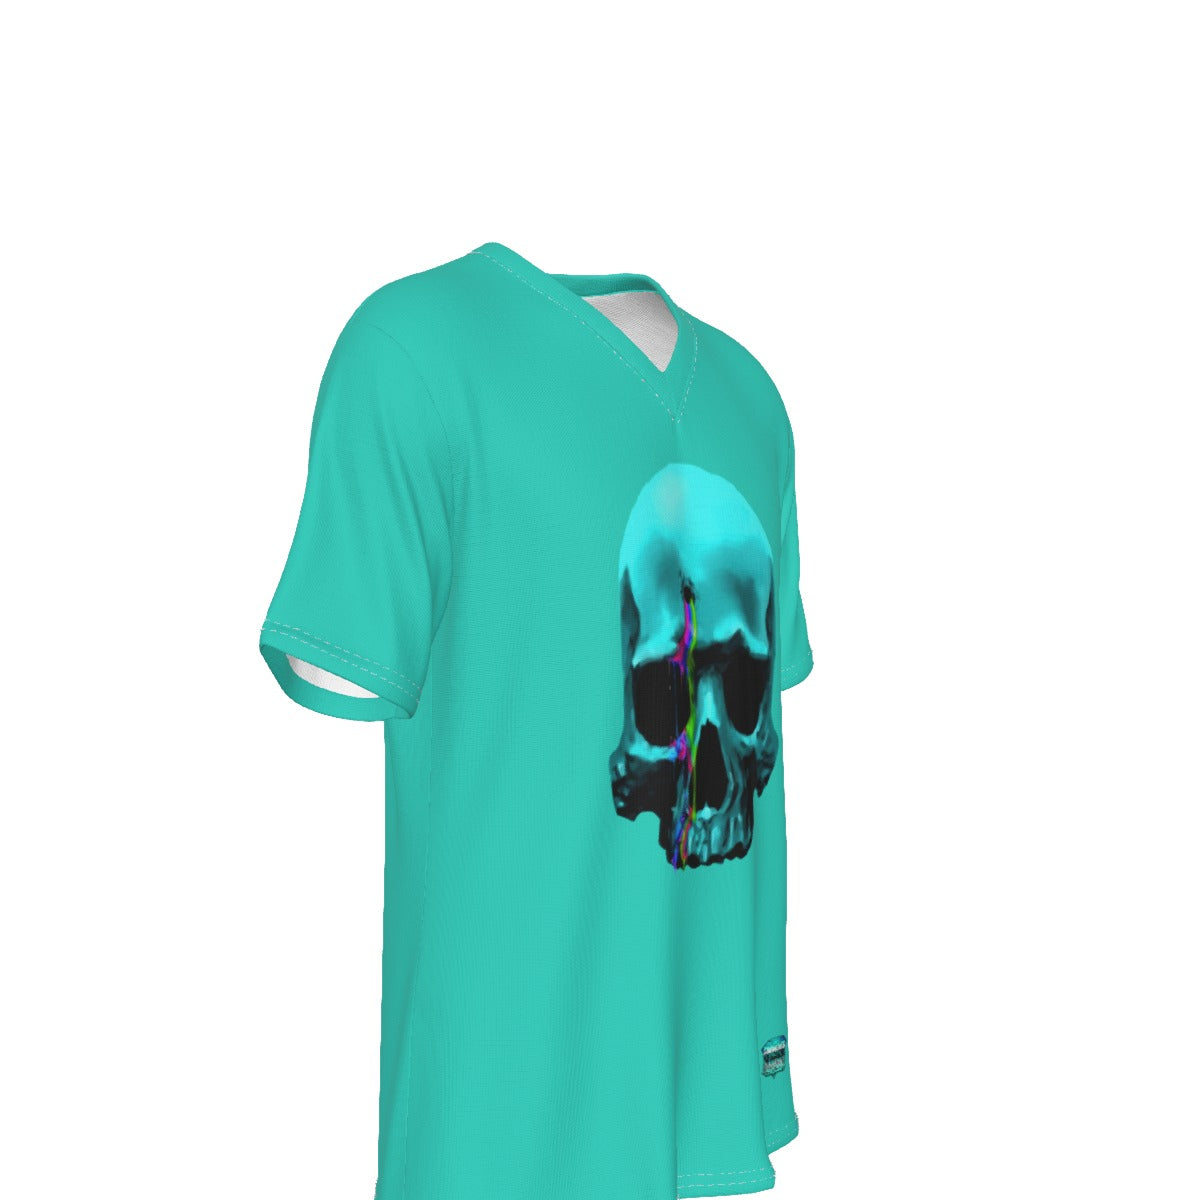 D.O.C. Teal Skull V-Neck T-Shirt